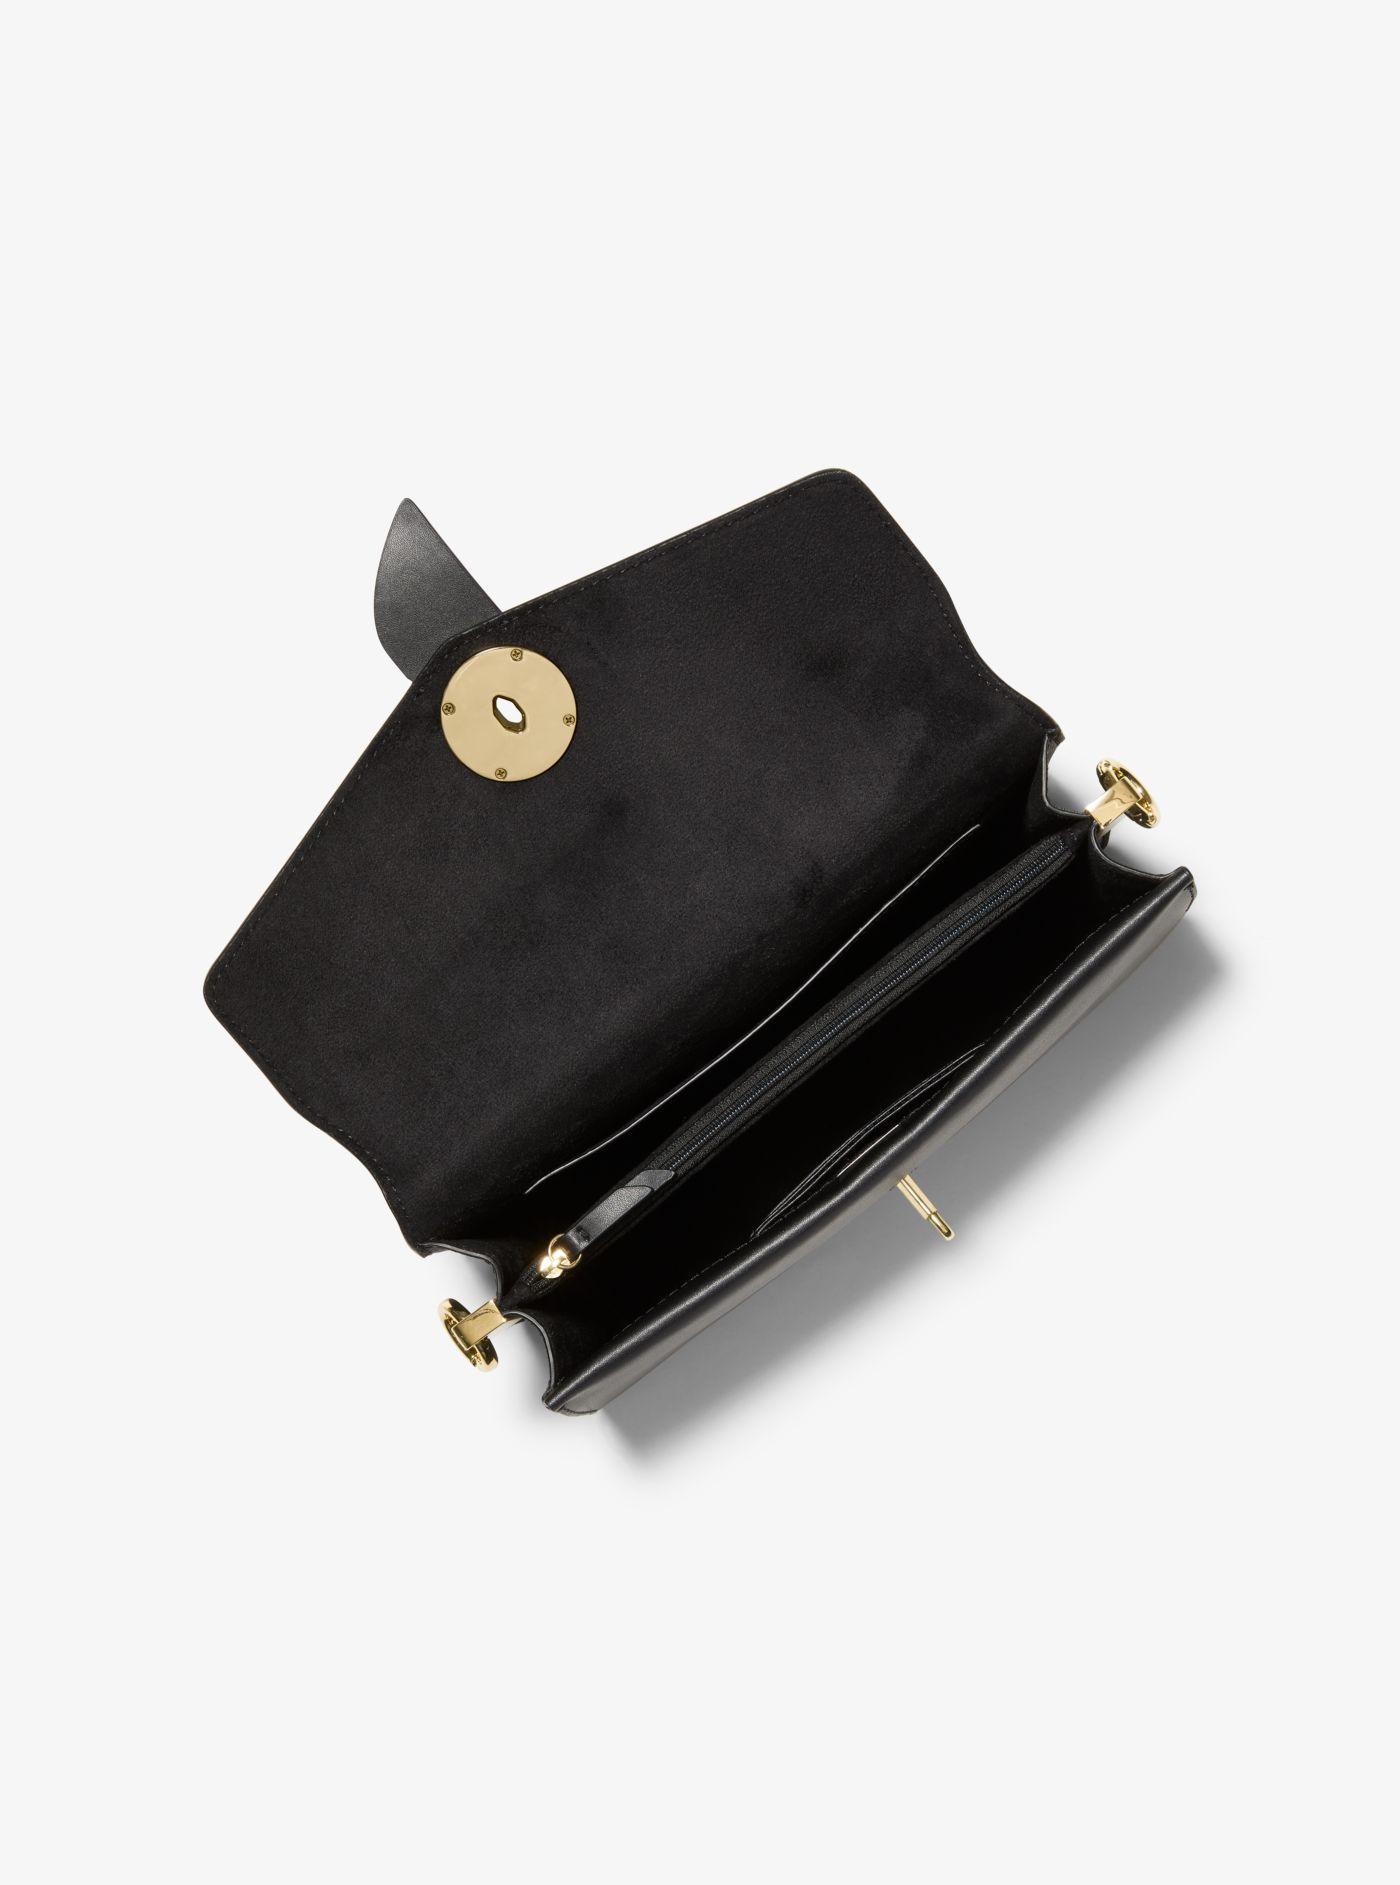 Michael Kors Greenwich Medium Saffiano Leather Shoulder Bag in Black | Lyst